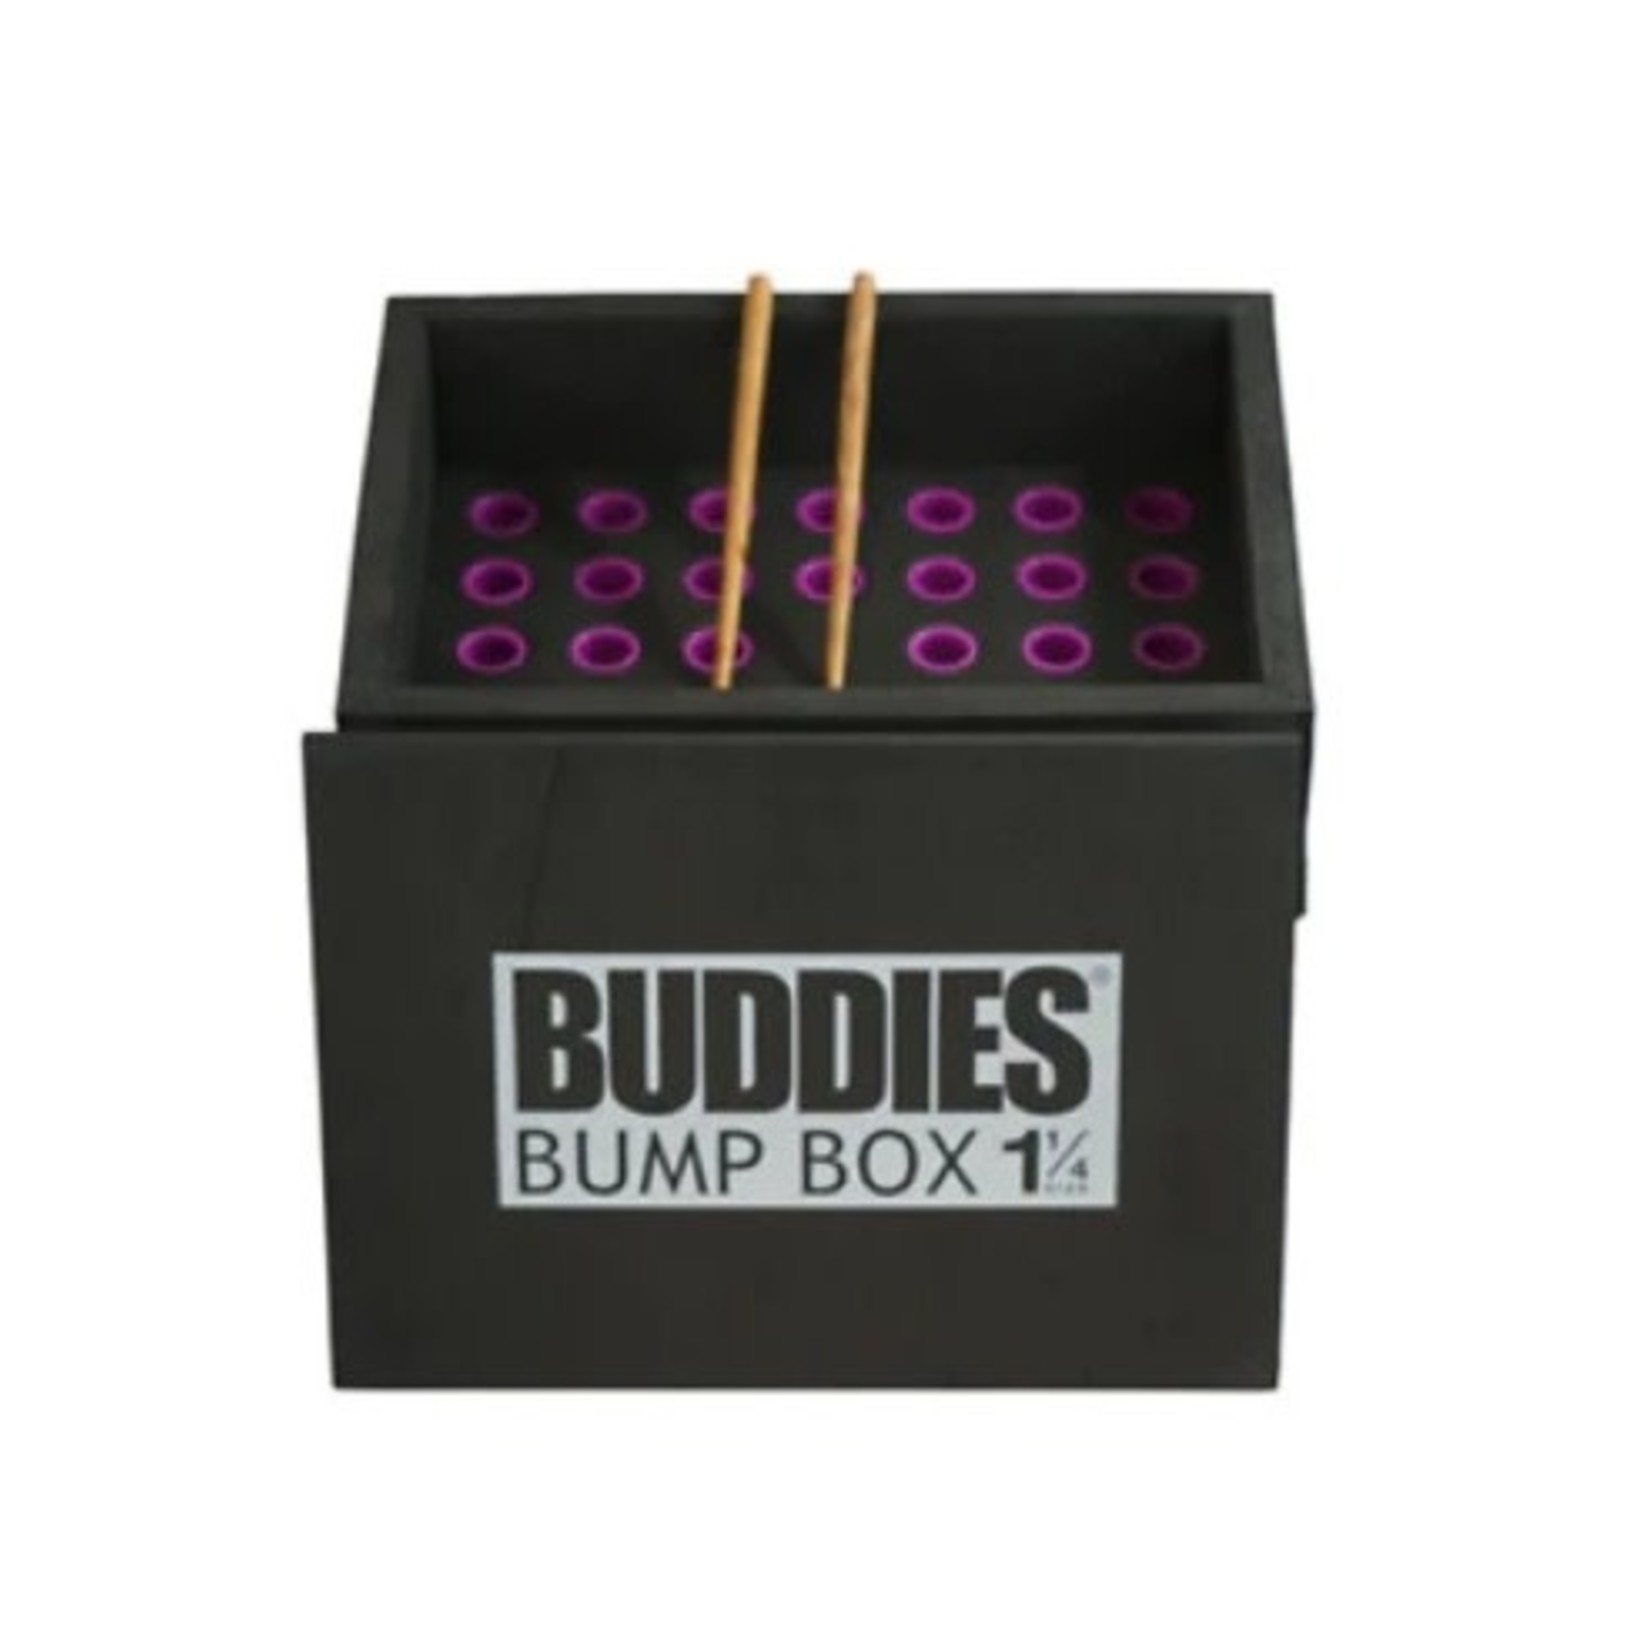 Buddies Bump Box - 1 1/4